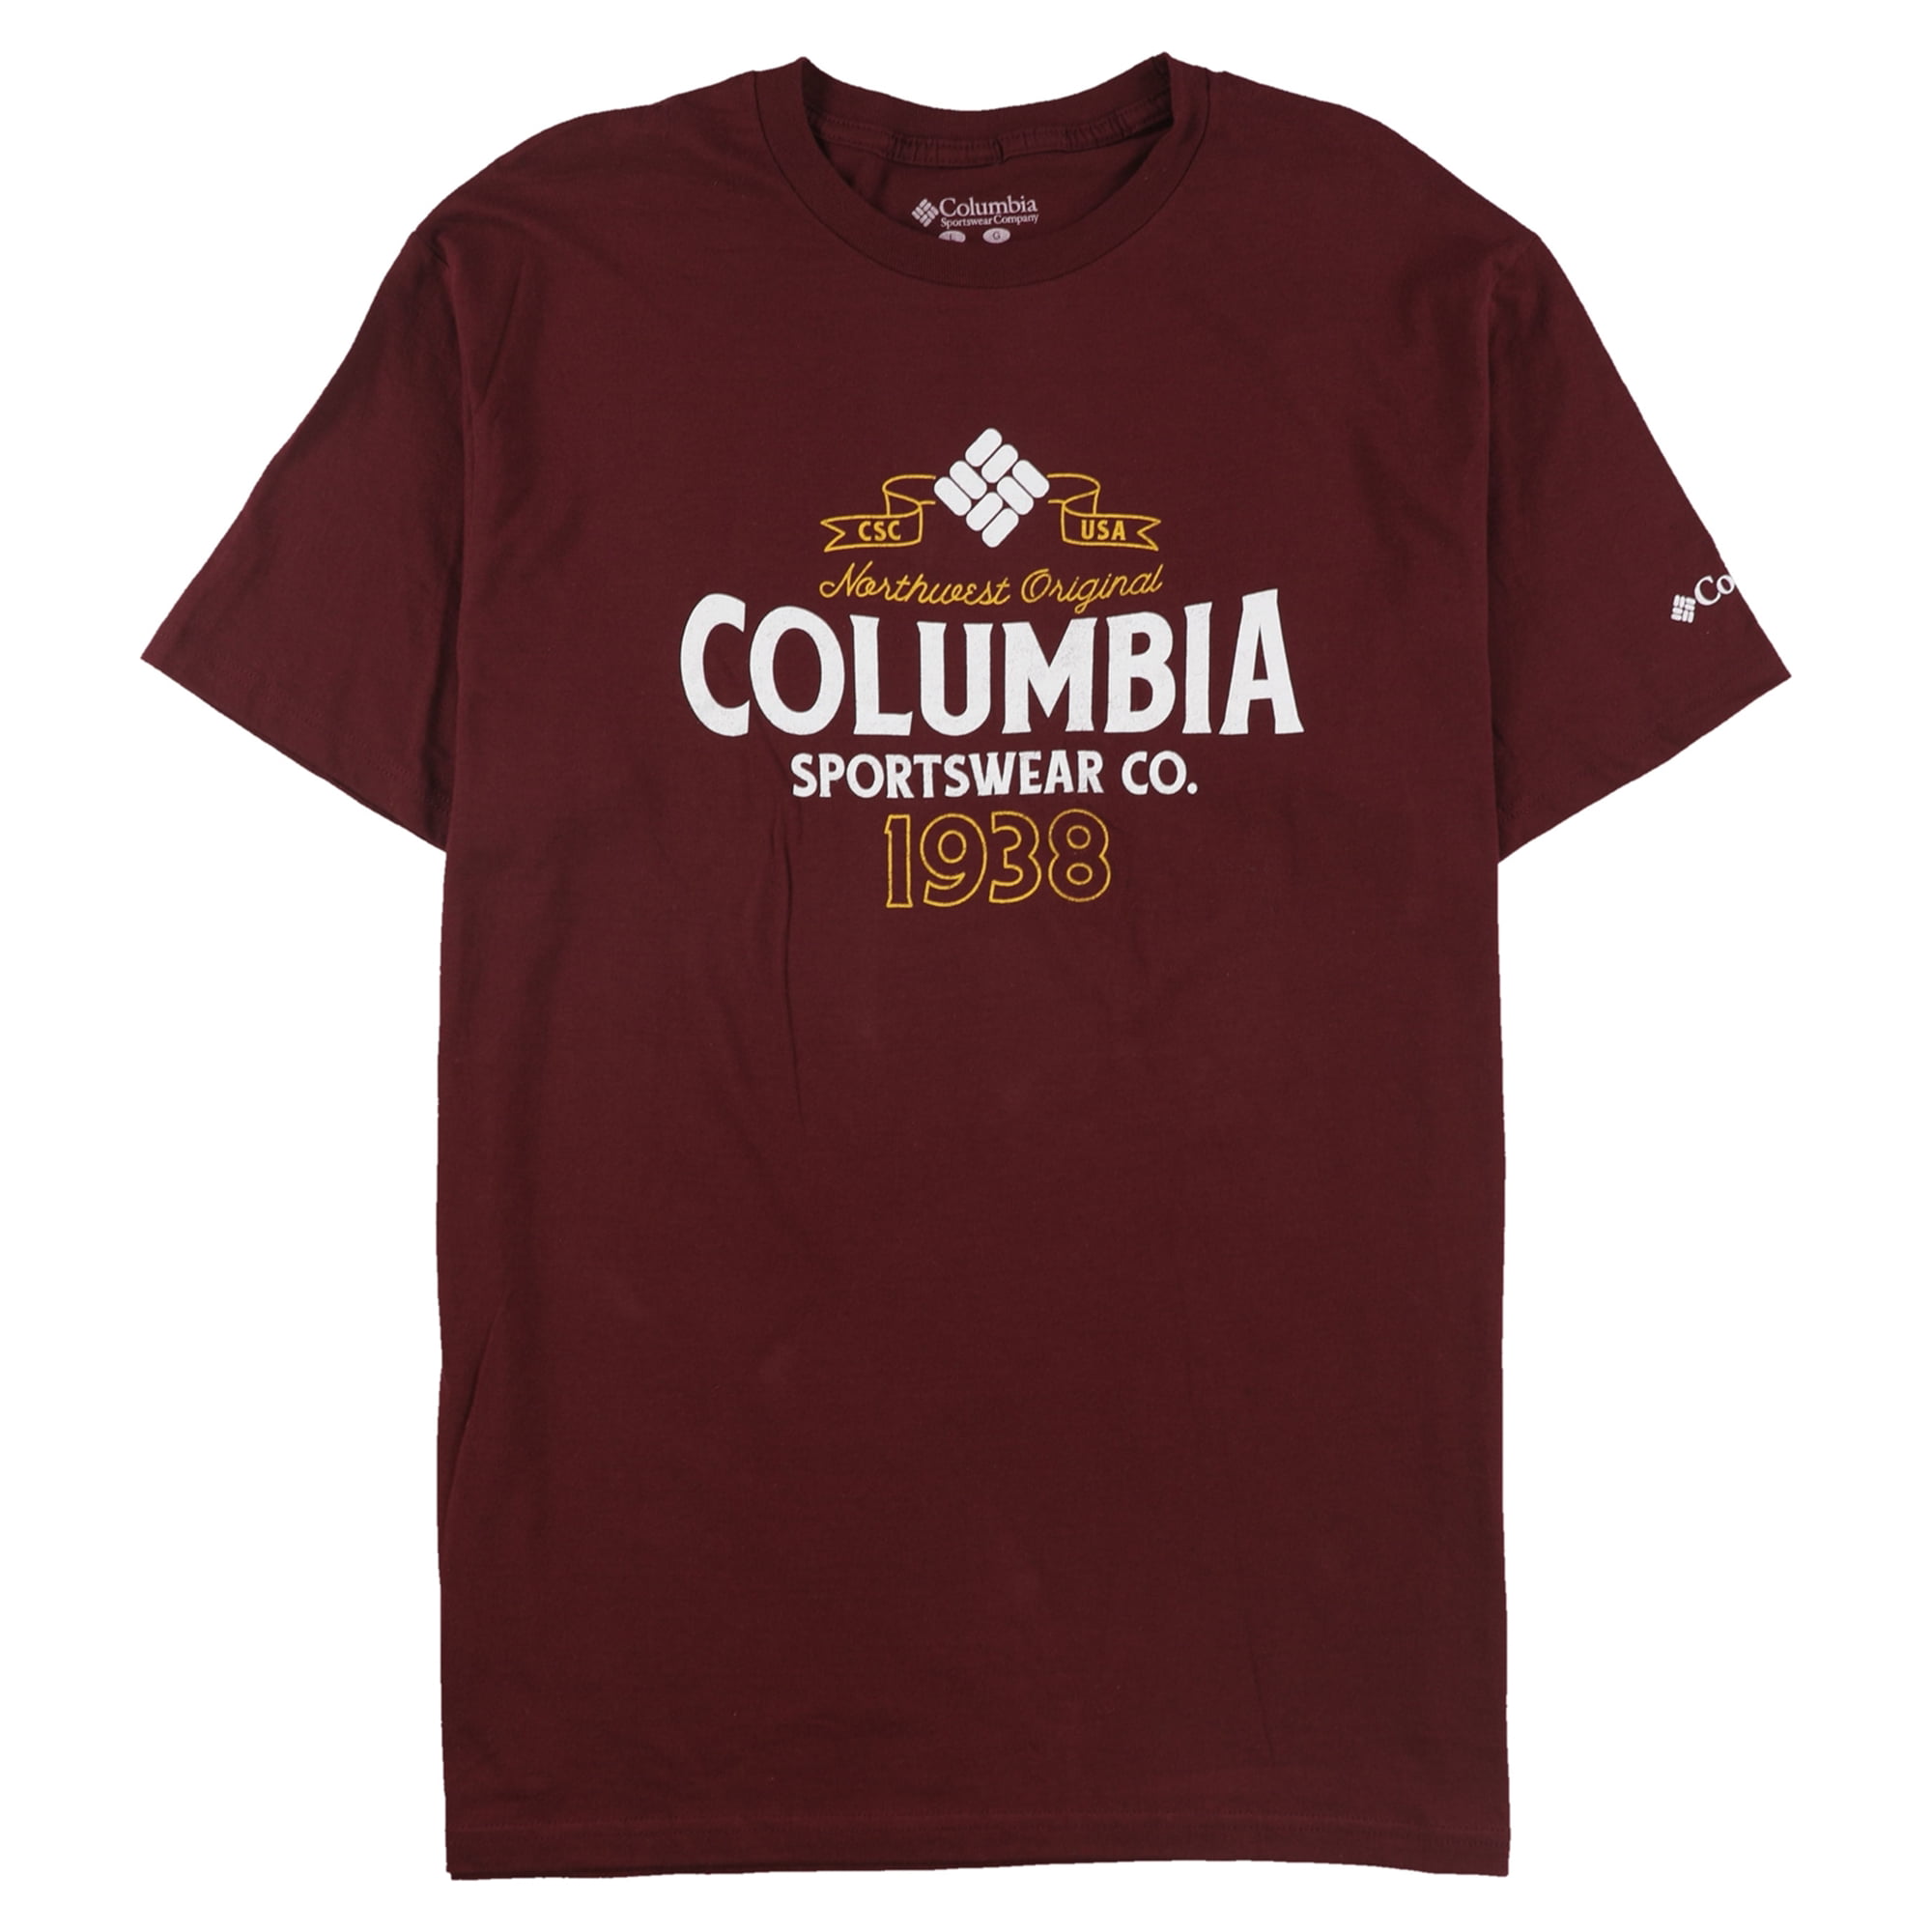 Columbia Sportswear co. 1938 Graphic T-Shirt, Red, Large - Walmart.com